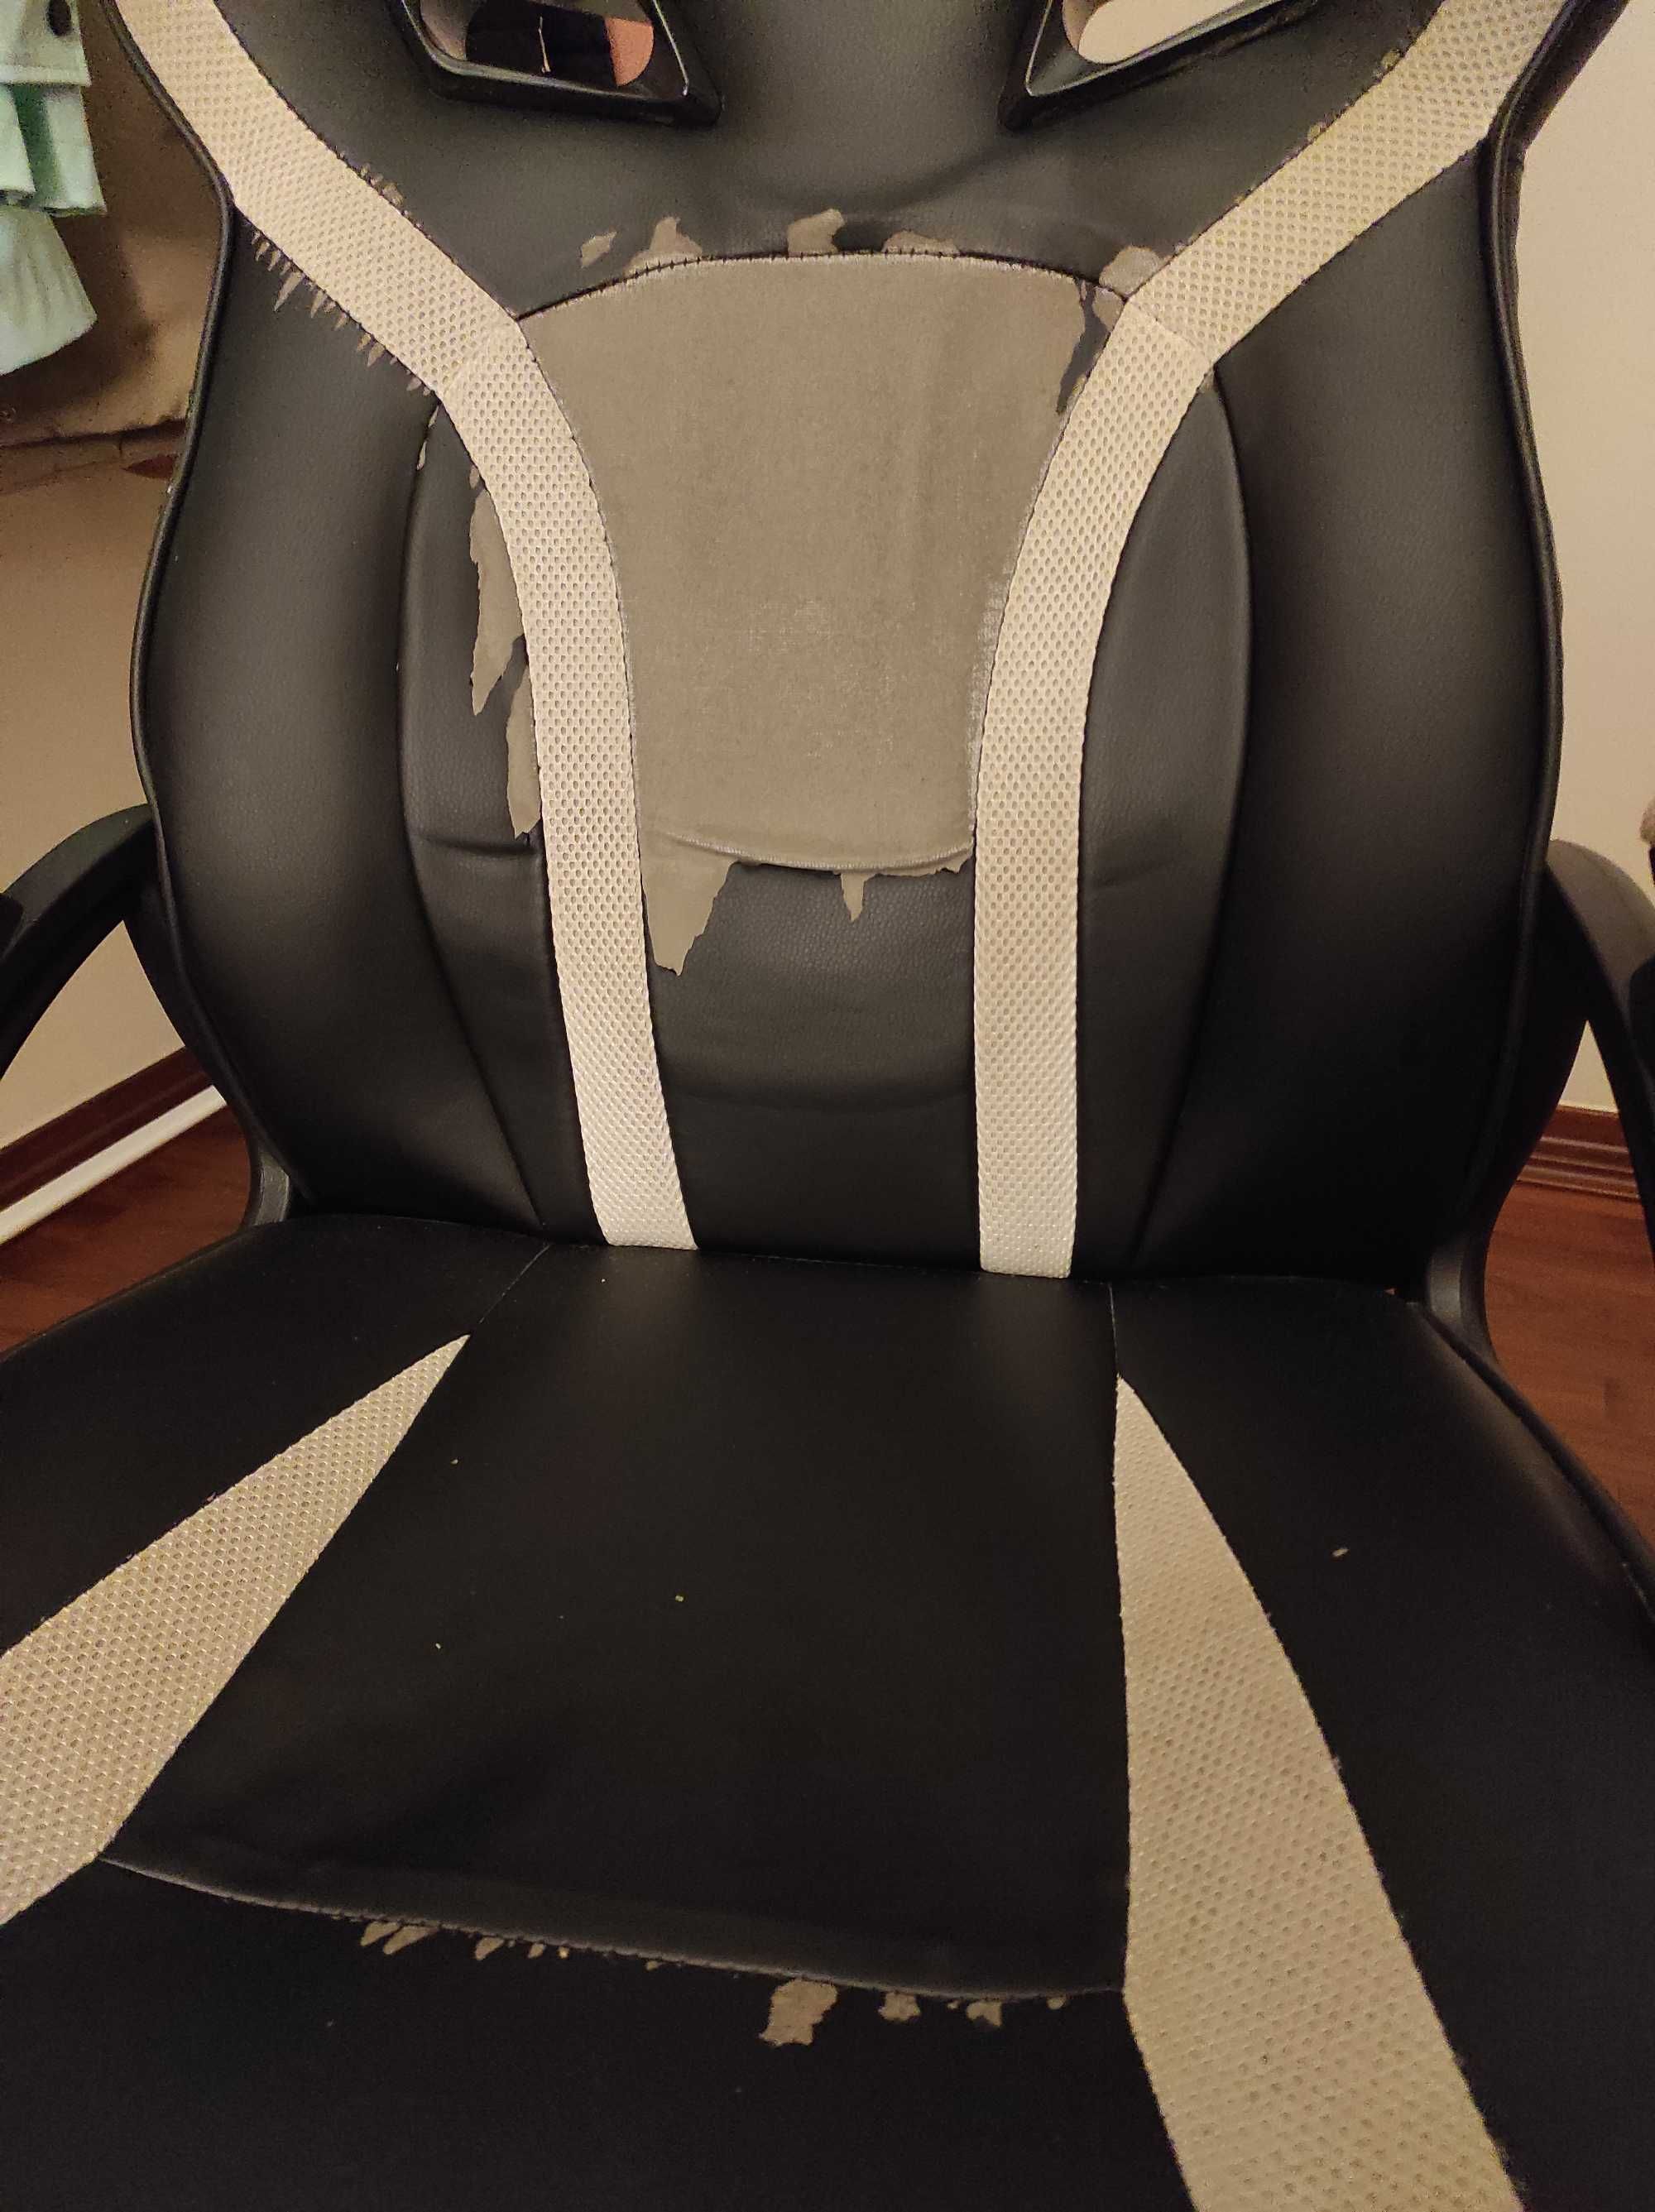 Cadeira Mars Gaming